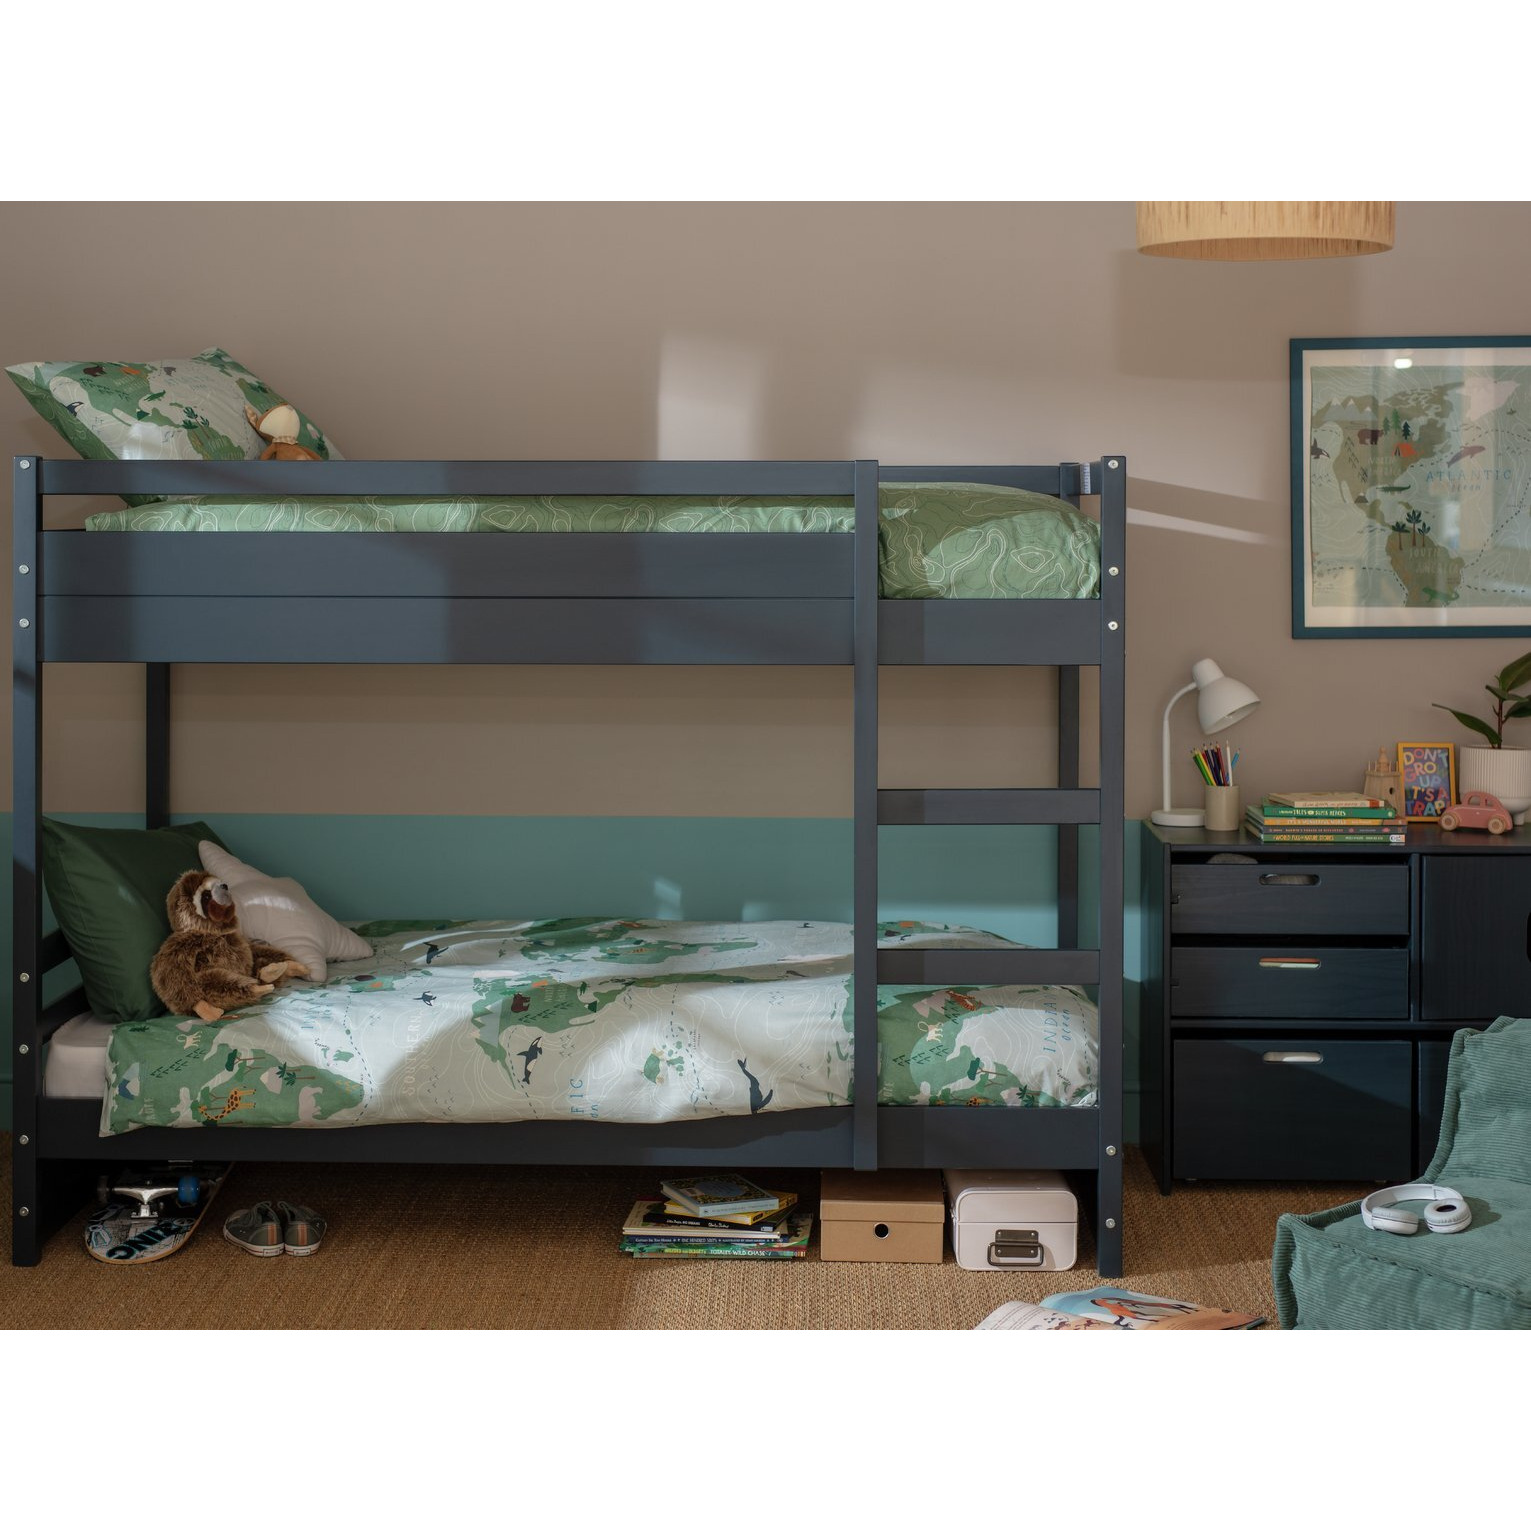 Habitat Rico Bunk Bed Frame With 2 Mattress -Blue - image 1